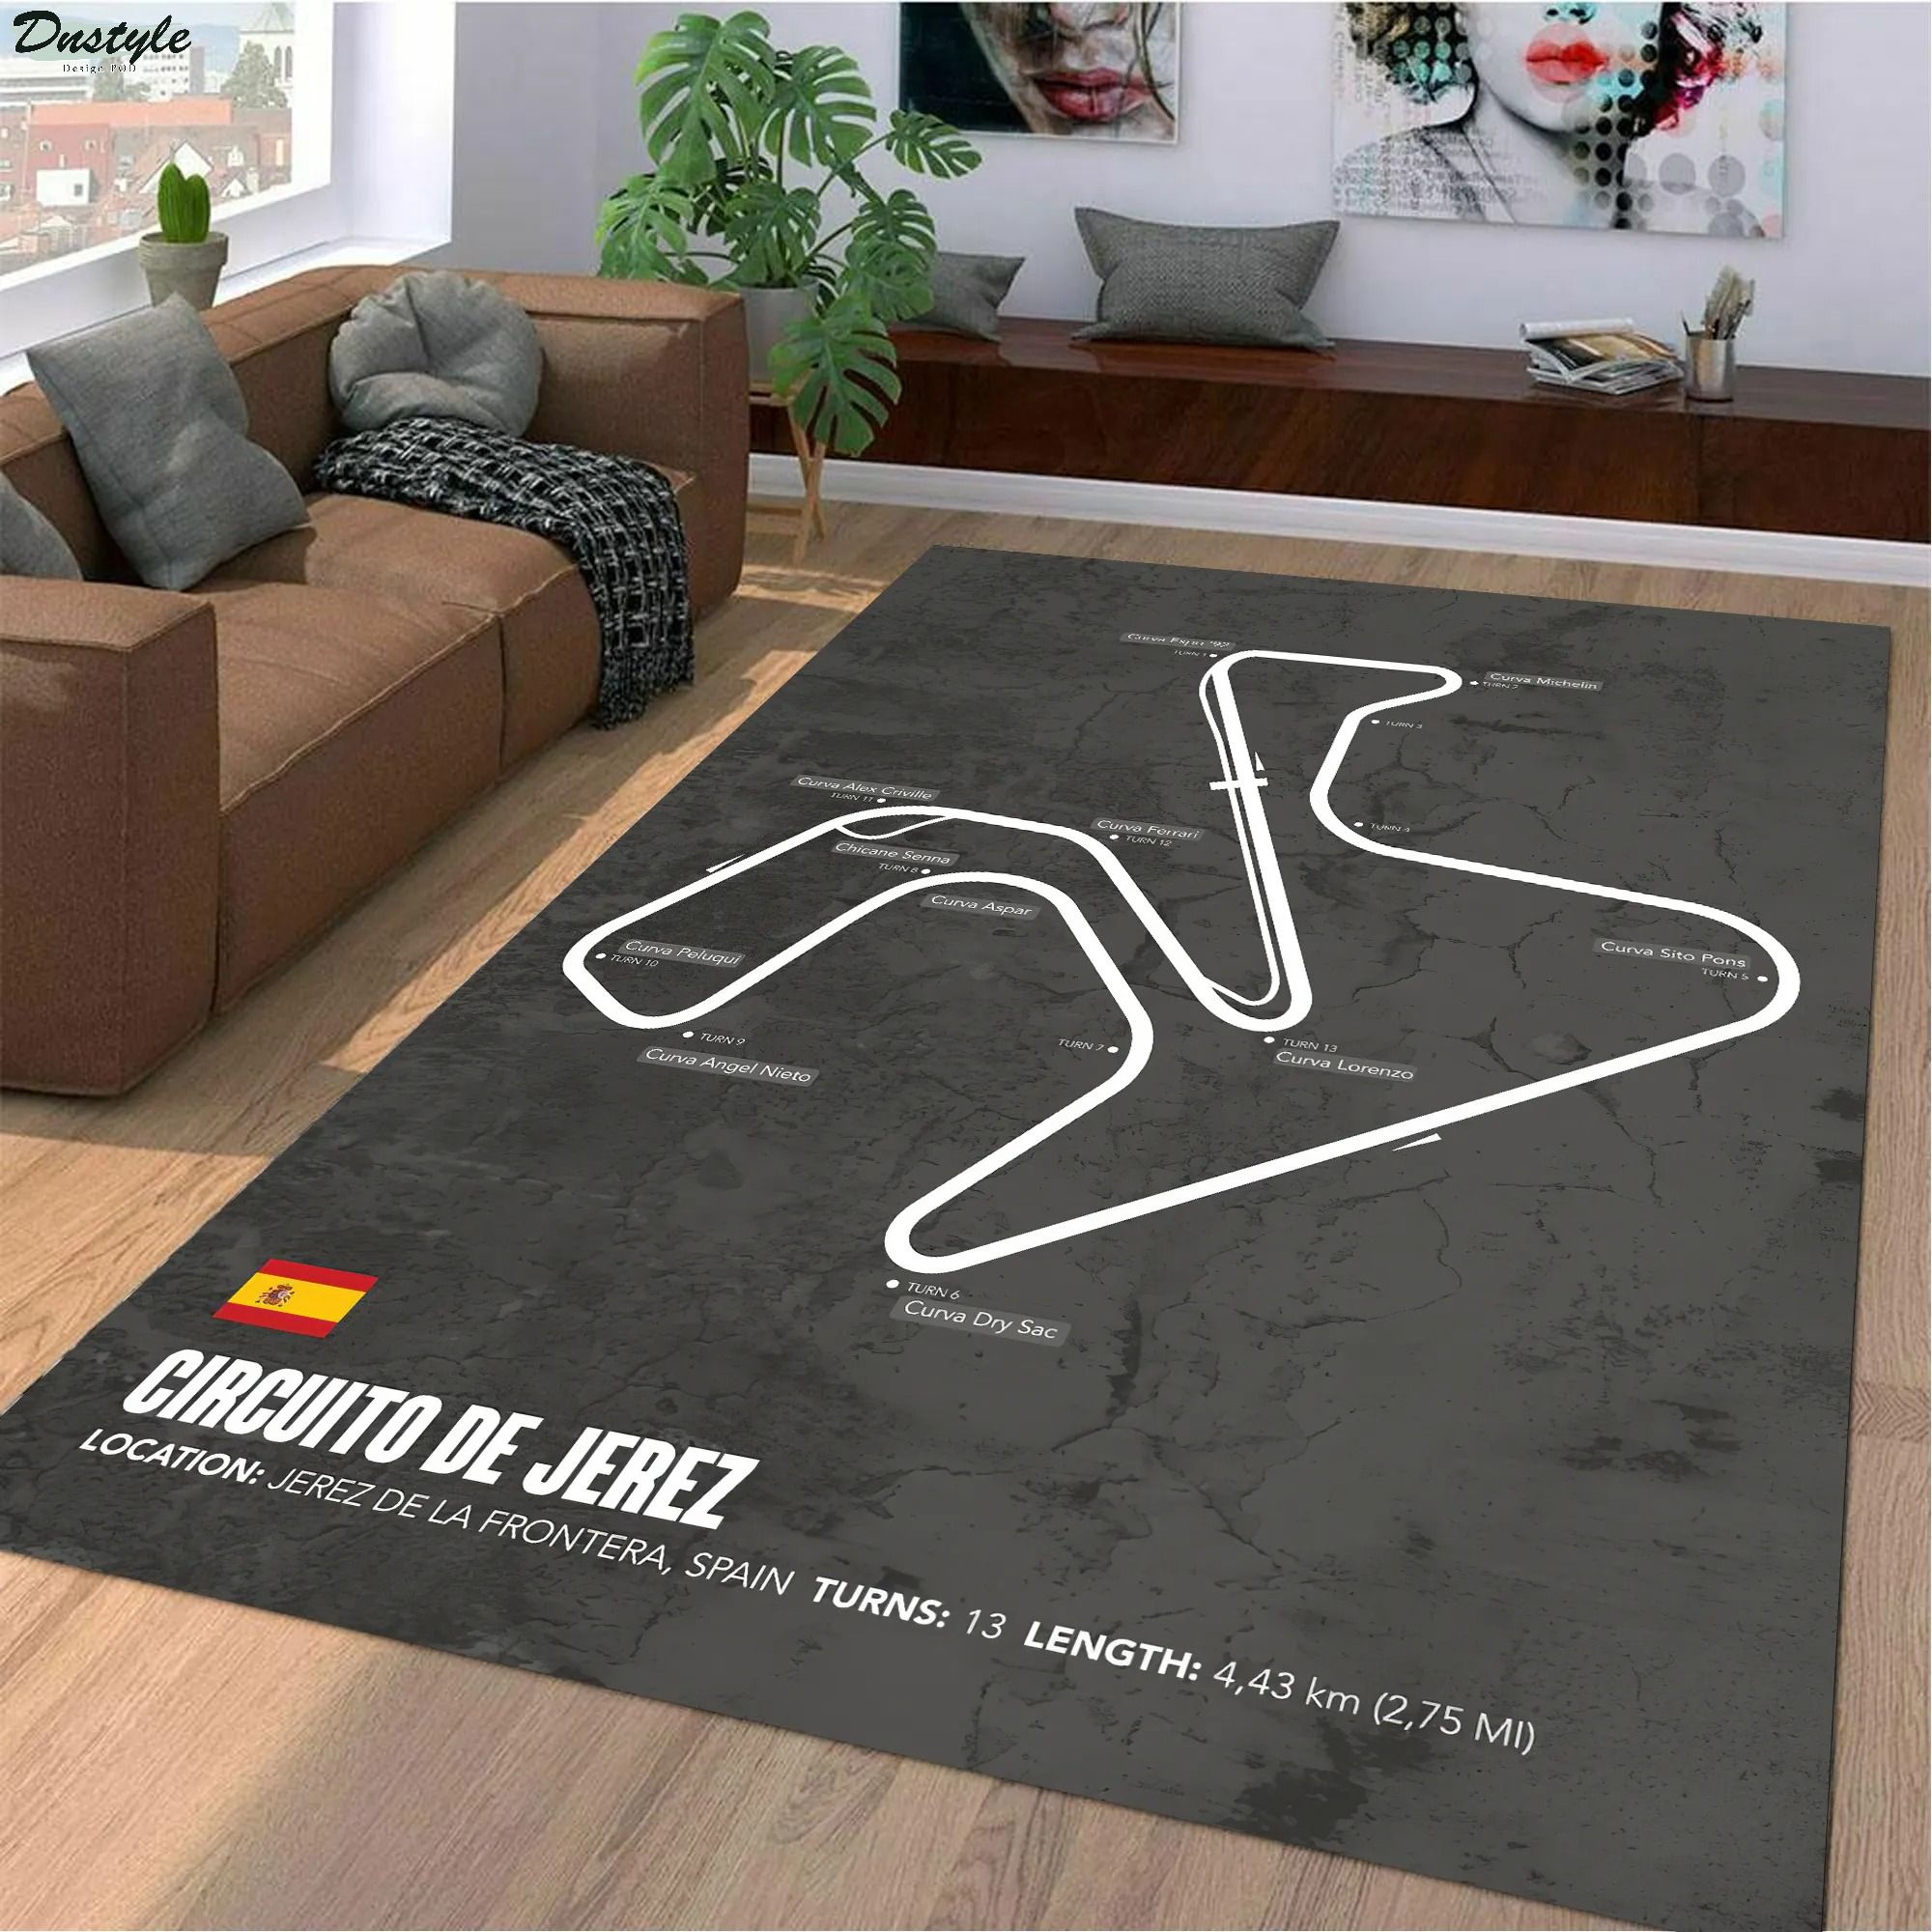 Circuit de jerez f1 track rug 2